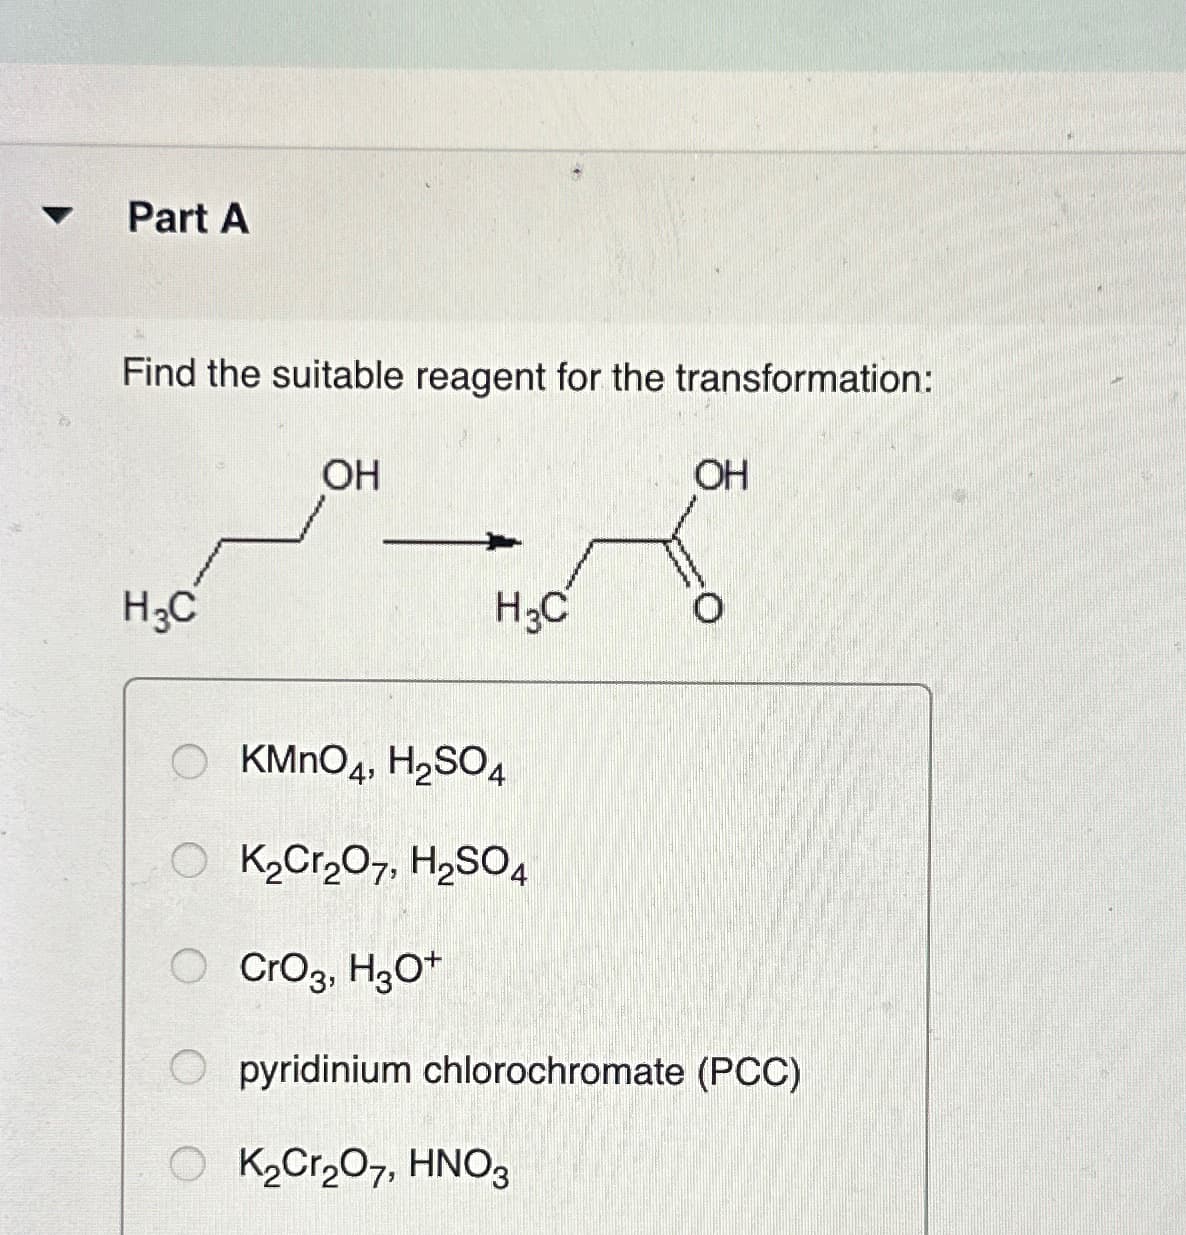 Part A
Find the suitable reagent for the transformation:
H3C
OH
H3C
OH
KMnO4, H2SO4
O K2Cr2O7, H2SO4
○ CrO3, H3O+
O pyridinium chlorochromate (PCC)
O K2Cr2O7, HNO3